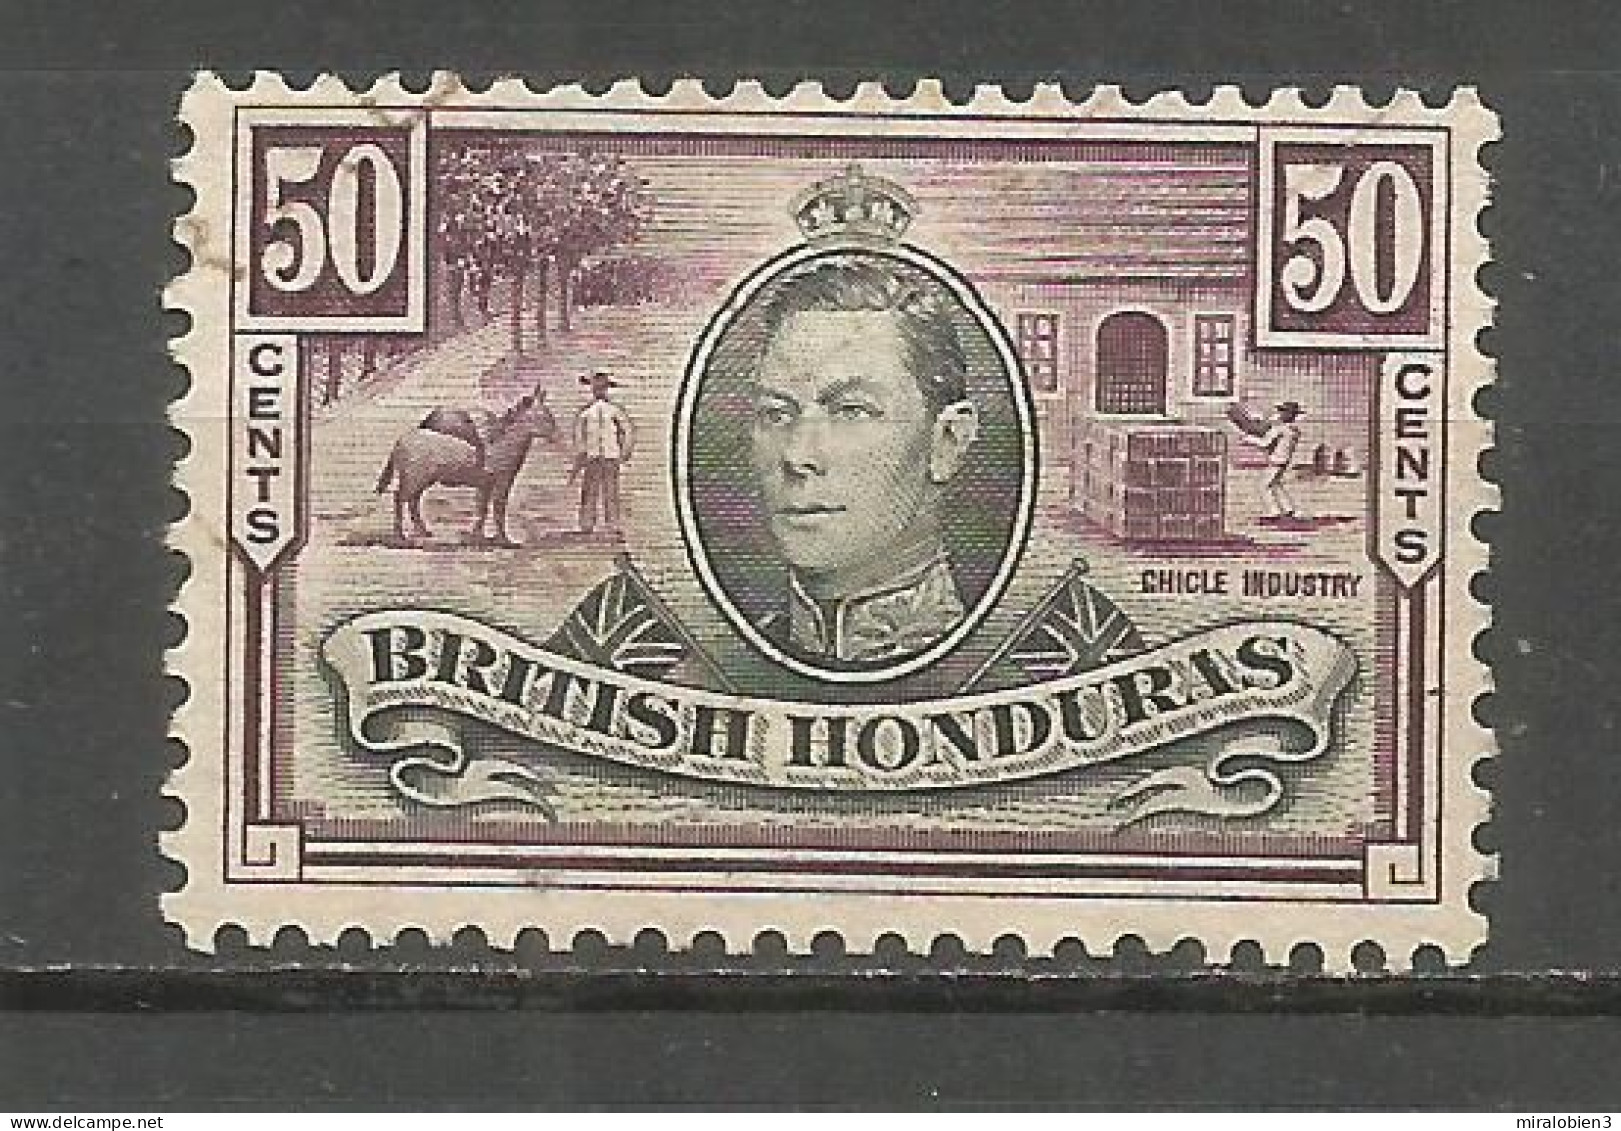 HONDURAS BRITANICA YVERT NUM. 126 USADO - Honduras Britannico (...-1970)